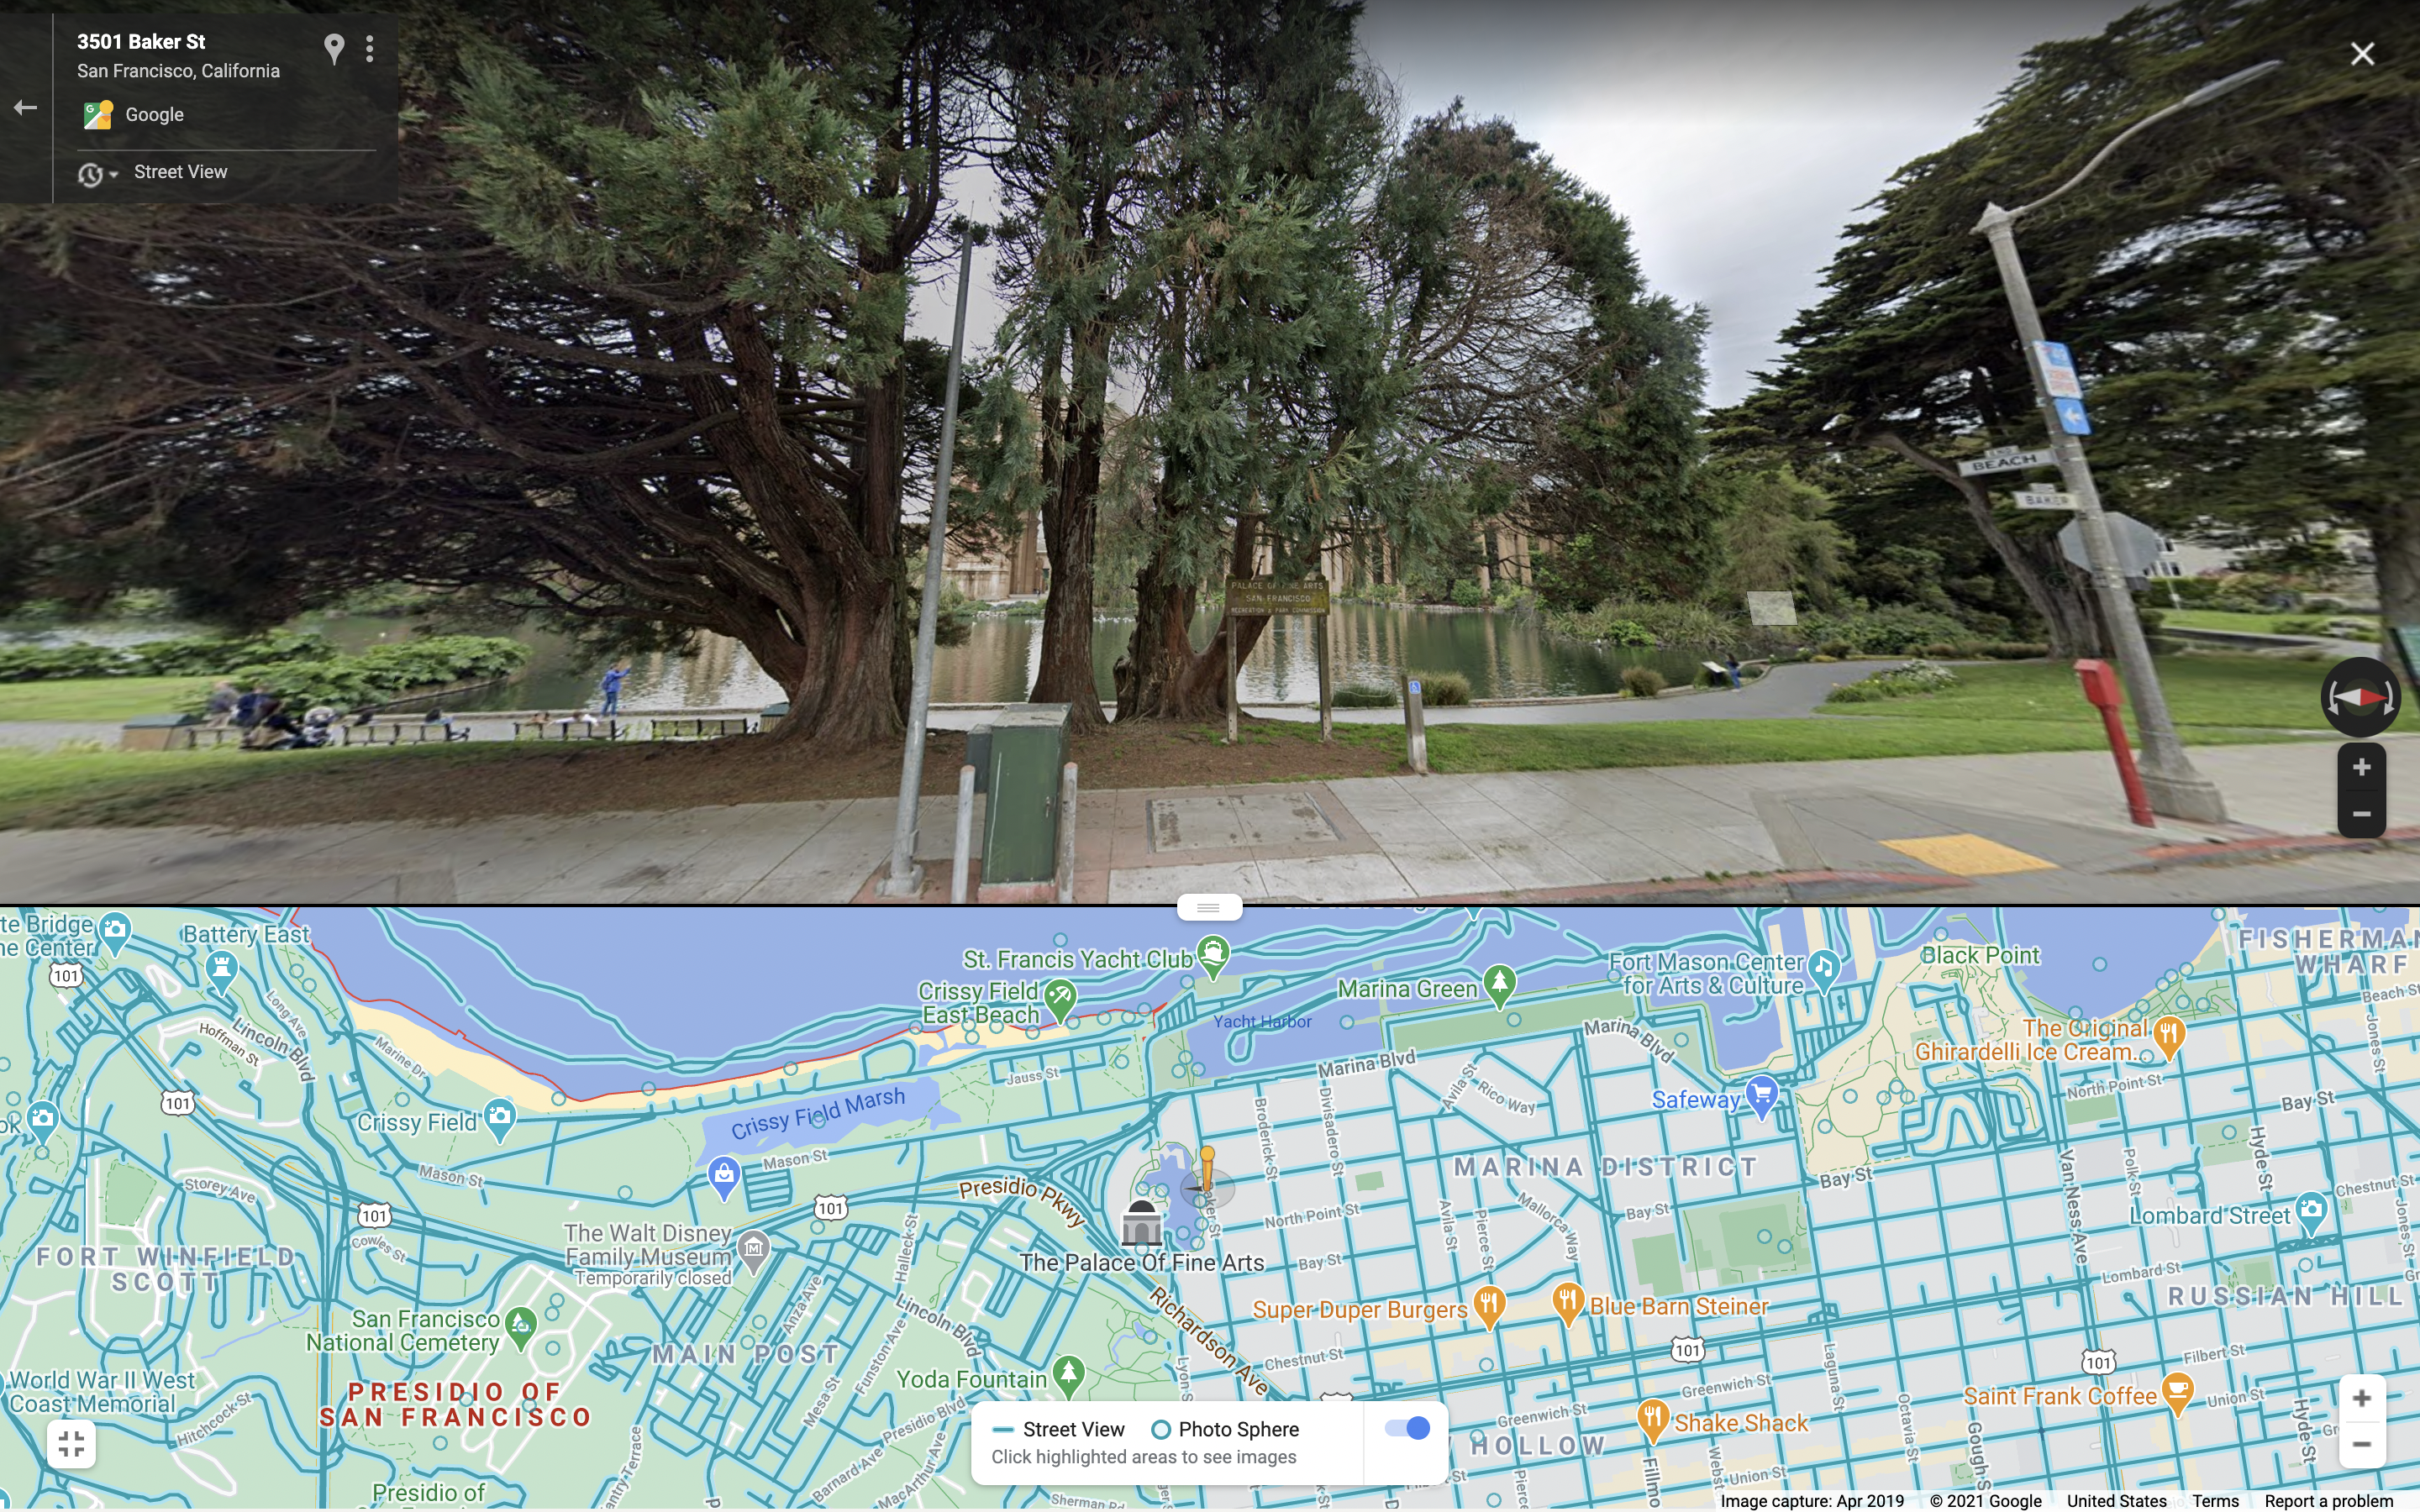 google maps street view gets split